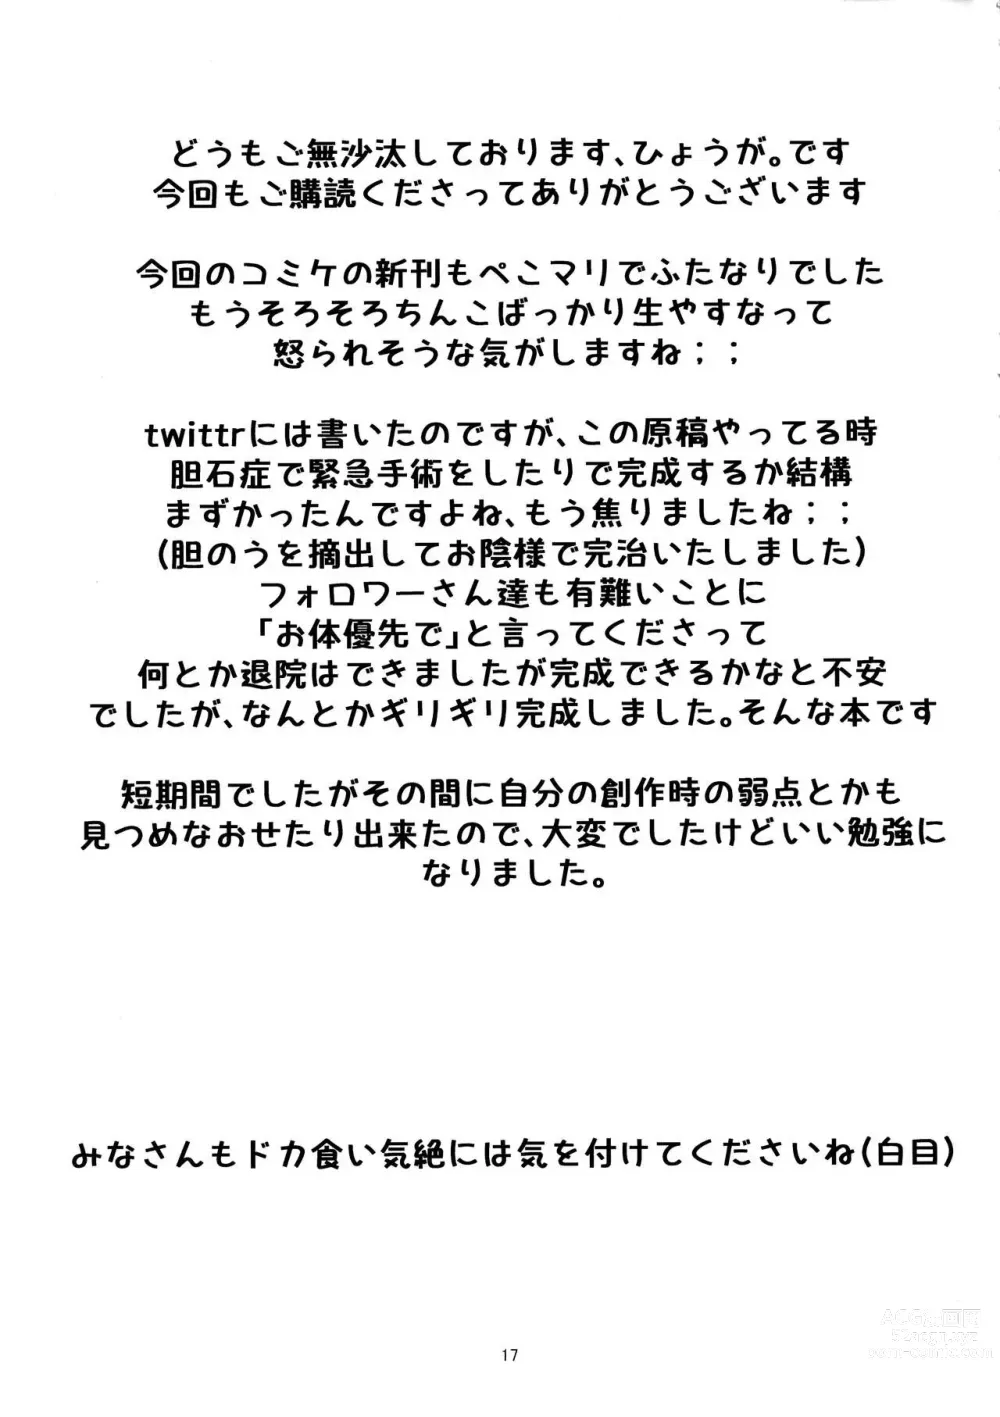 Page 17 of doujinshi Buttonde KU! Peko Mari Summer